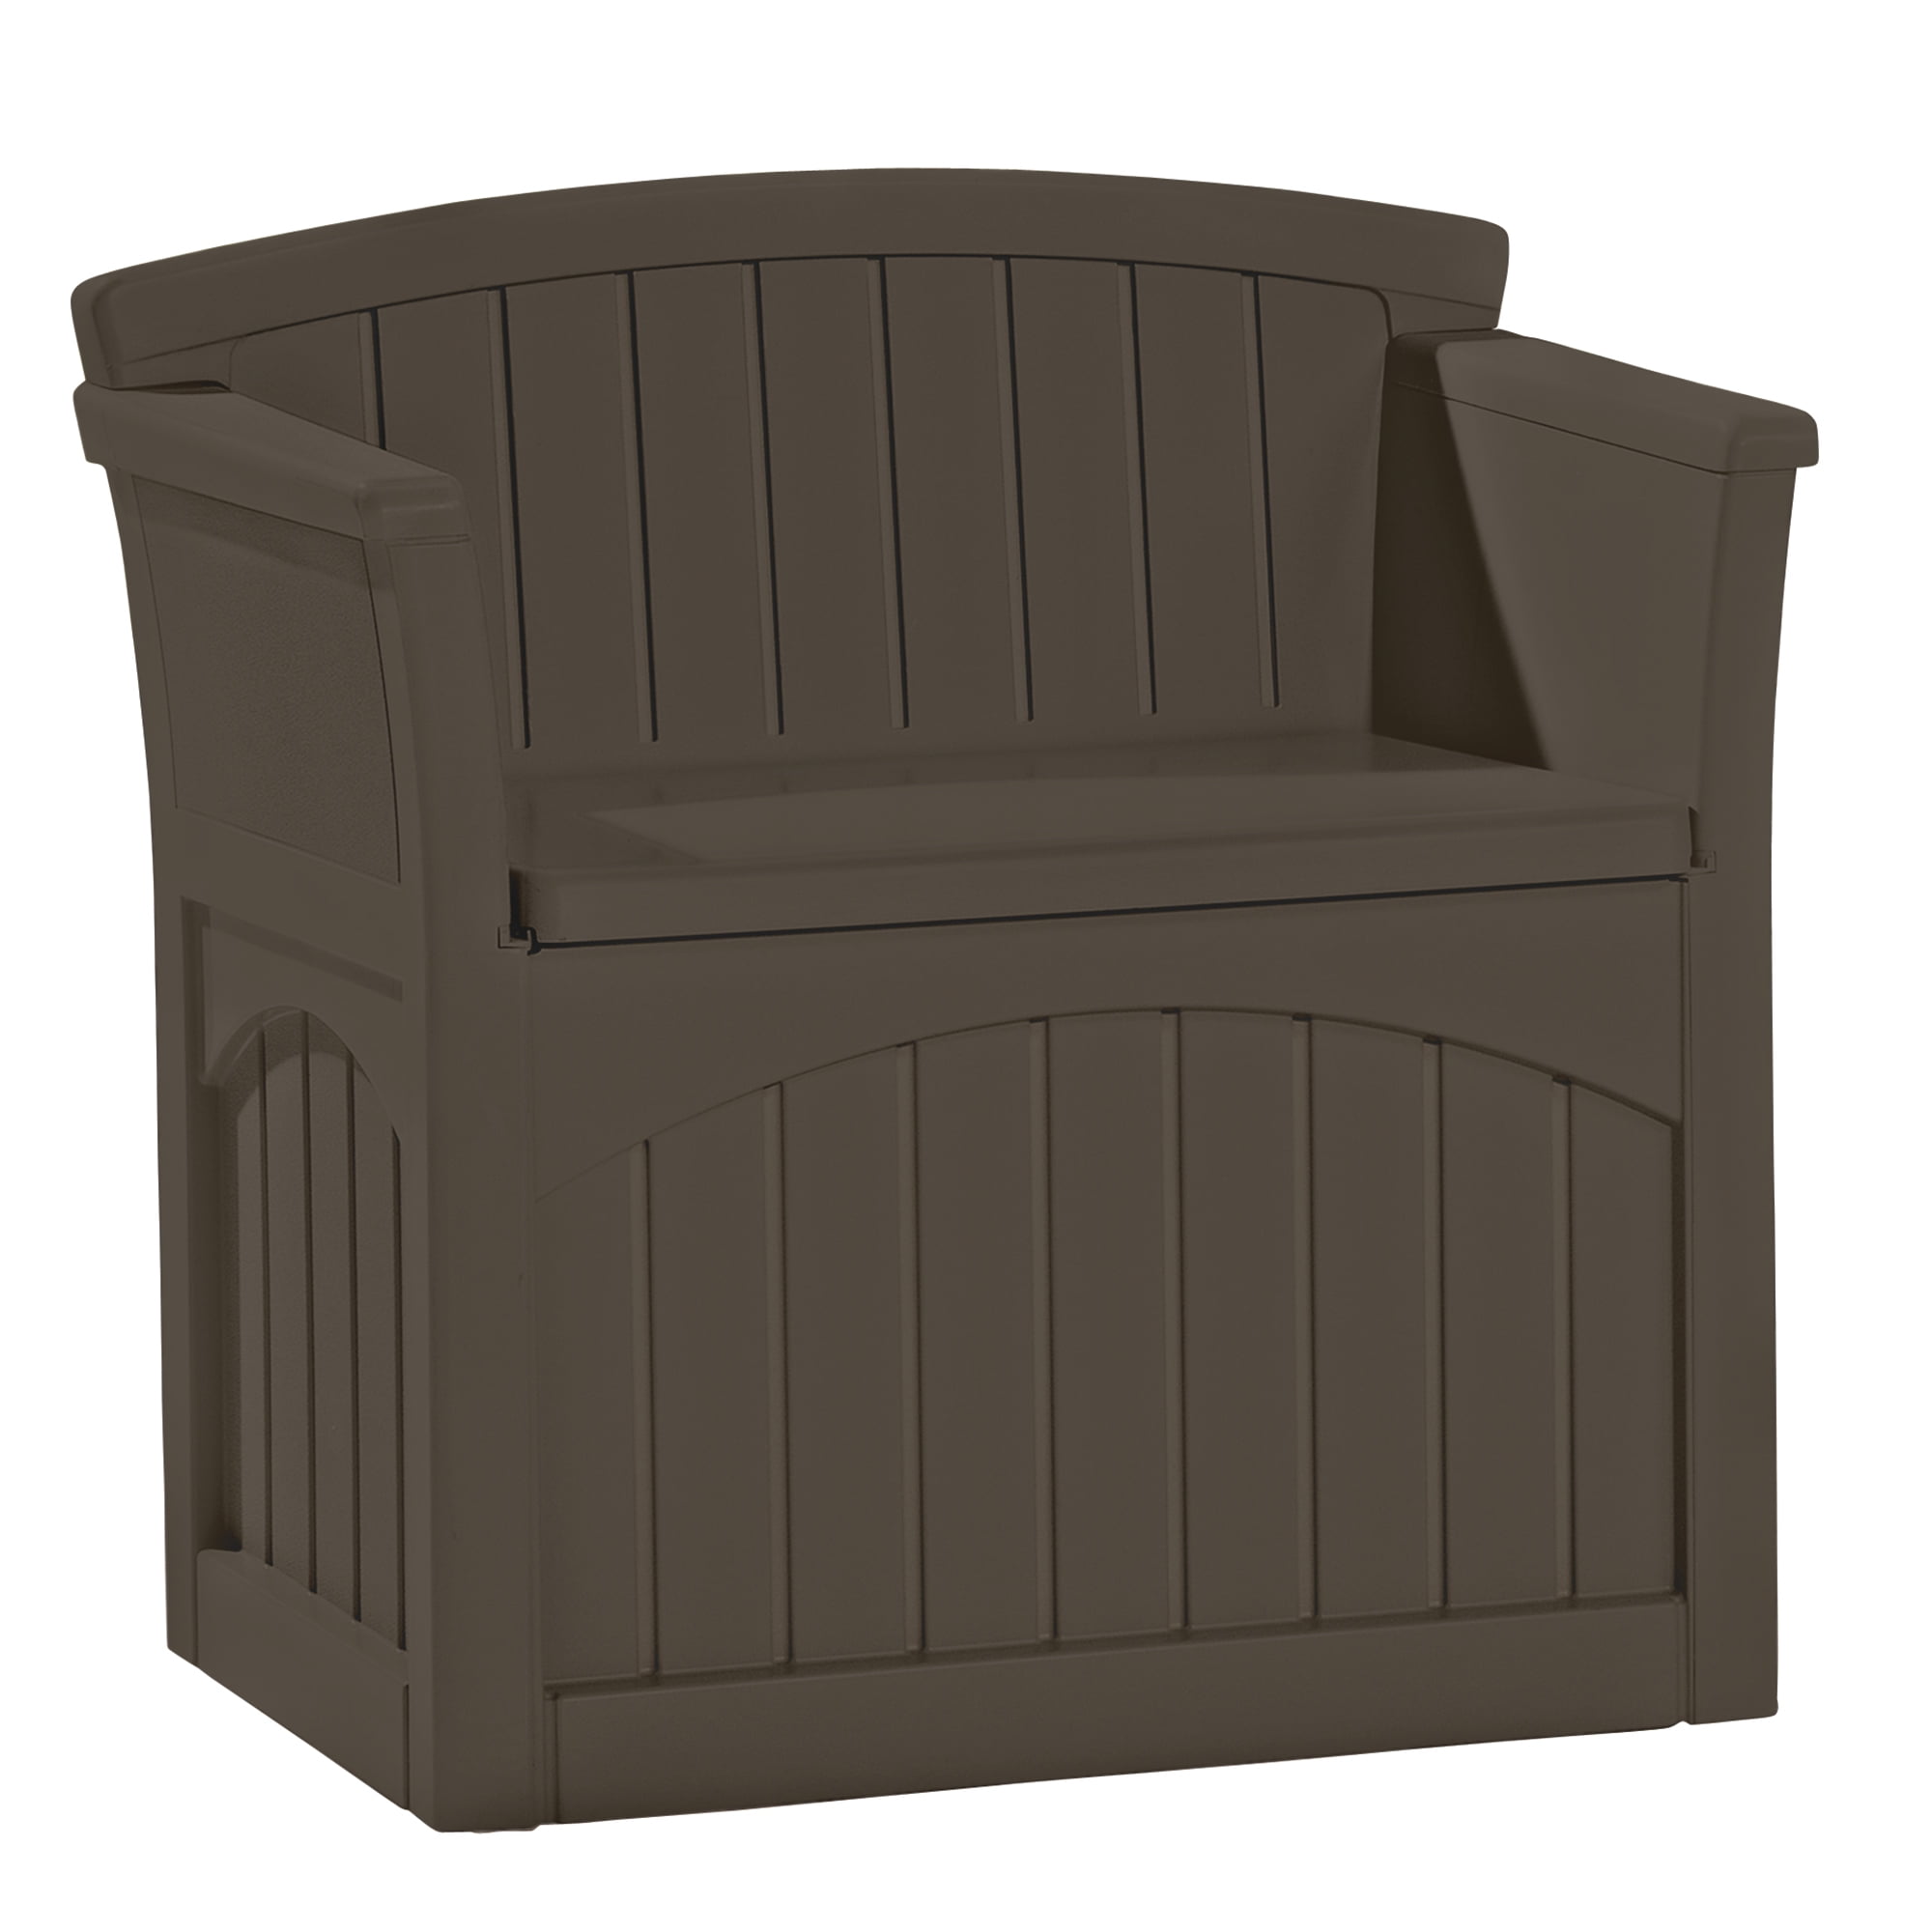 Suncast 31 Gallon Resin Outdoor Storage Bench